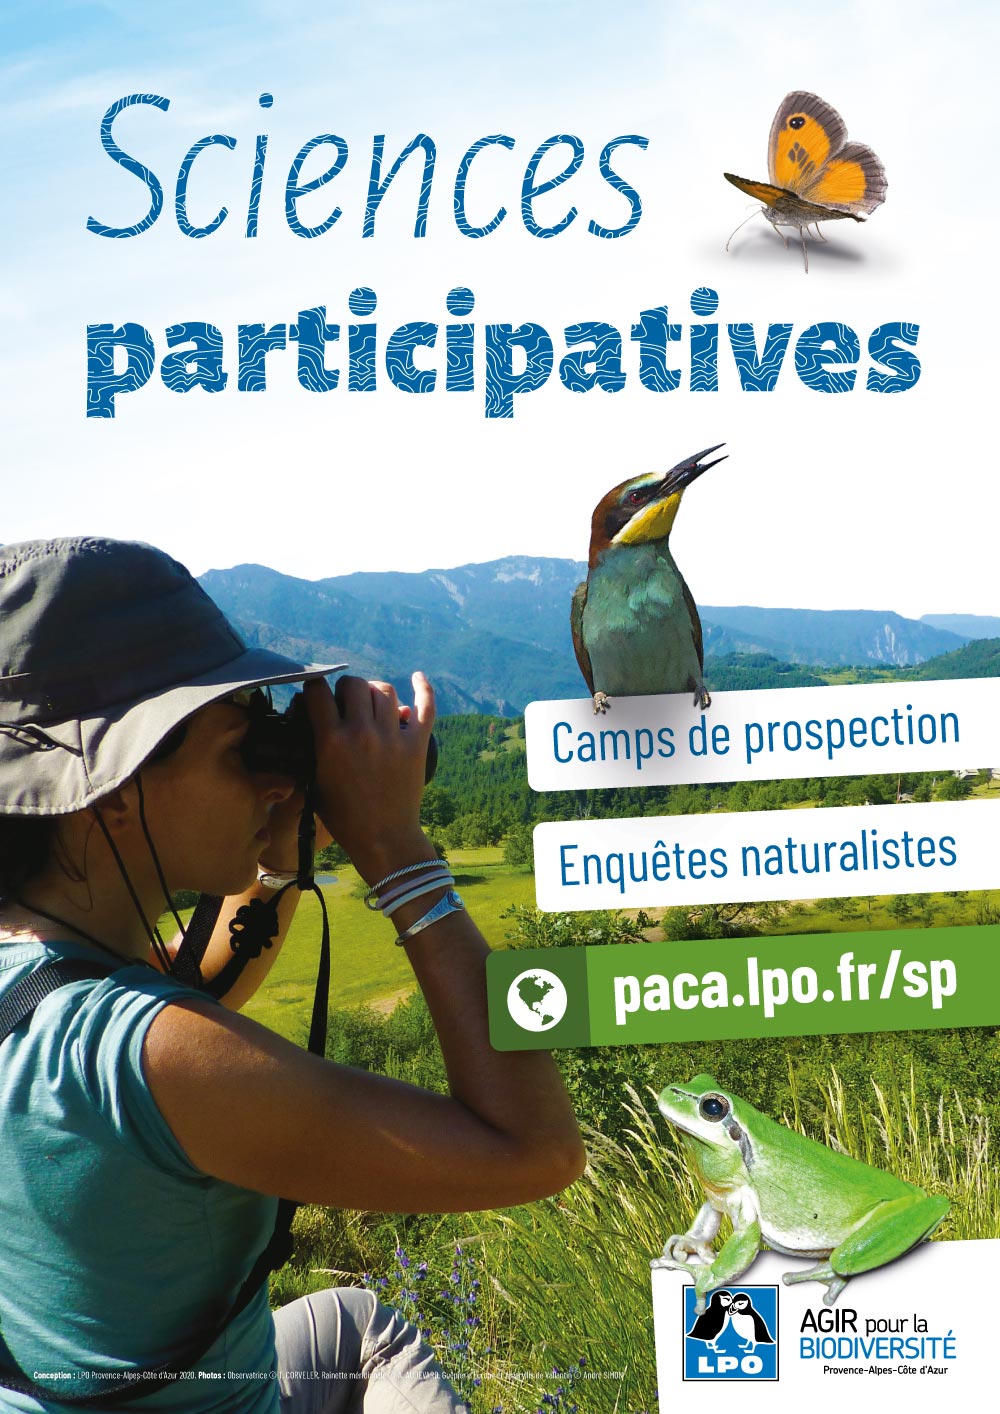 Sciences participatives